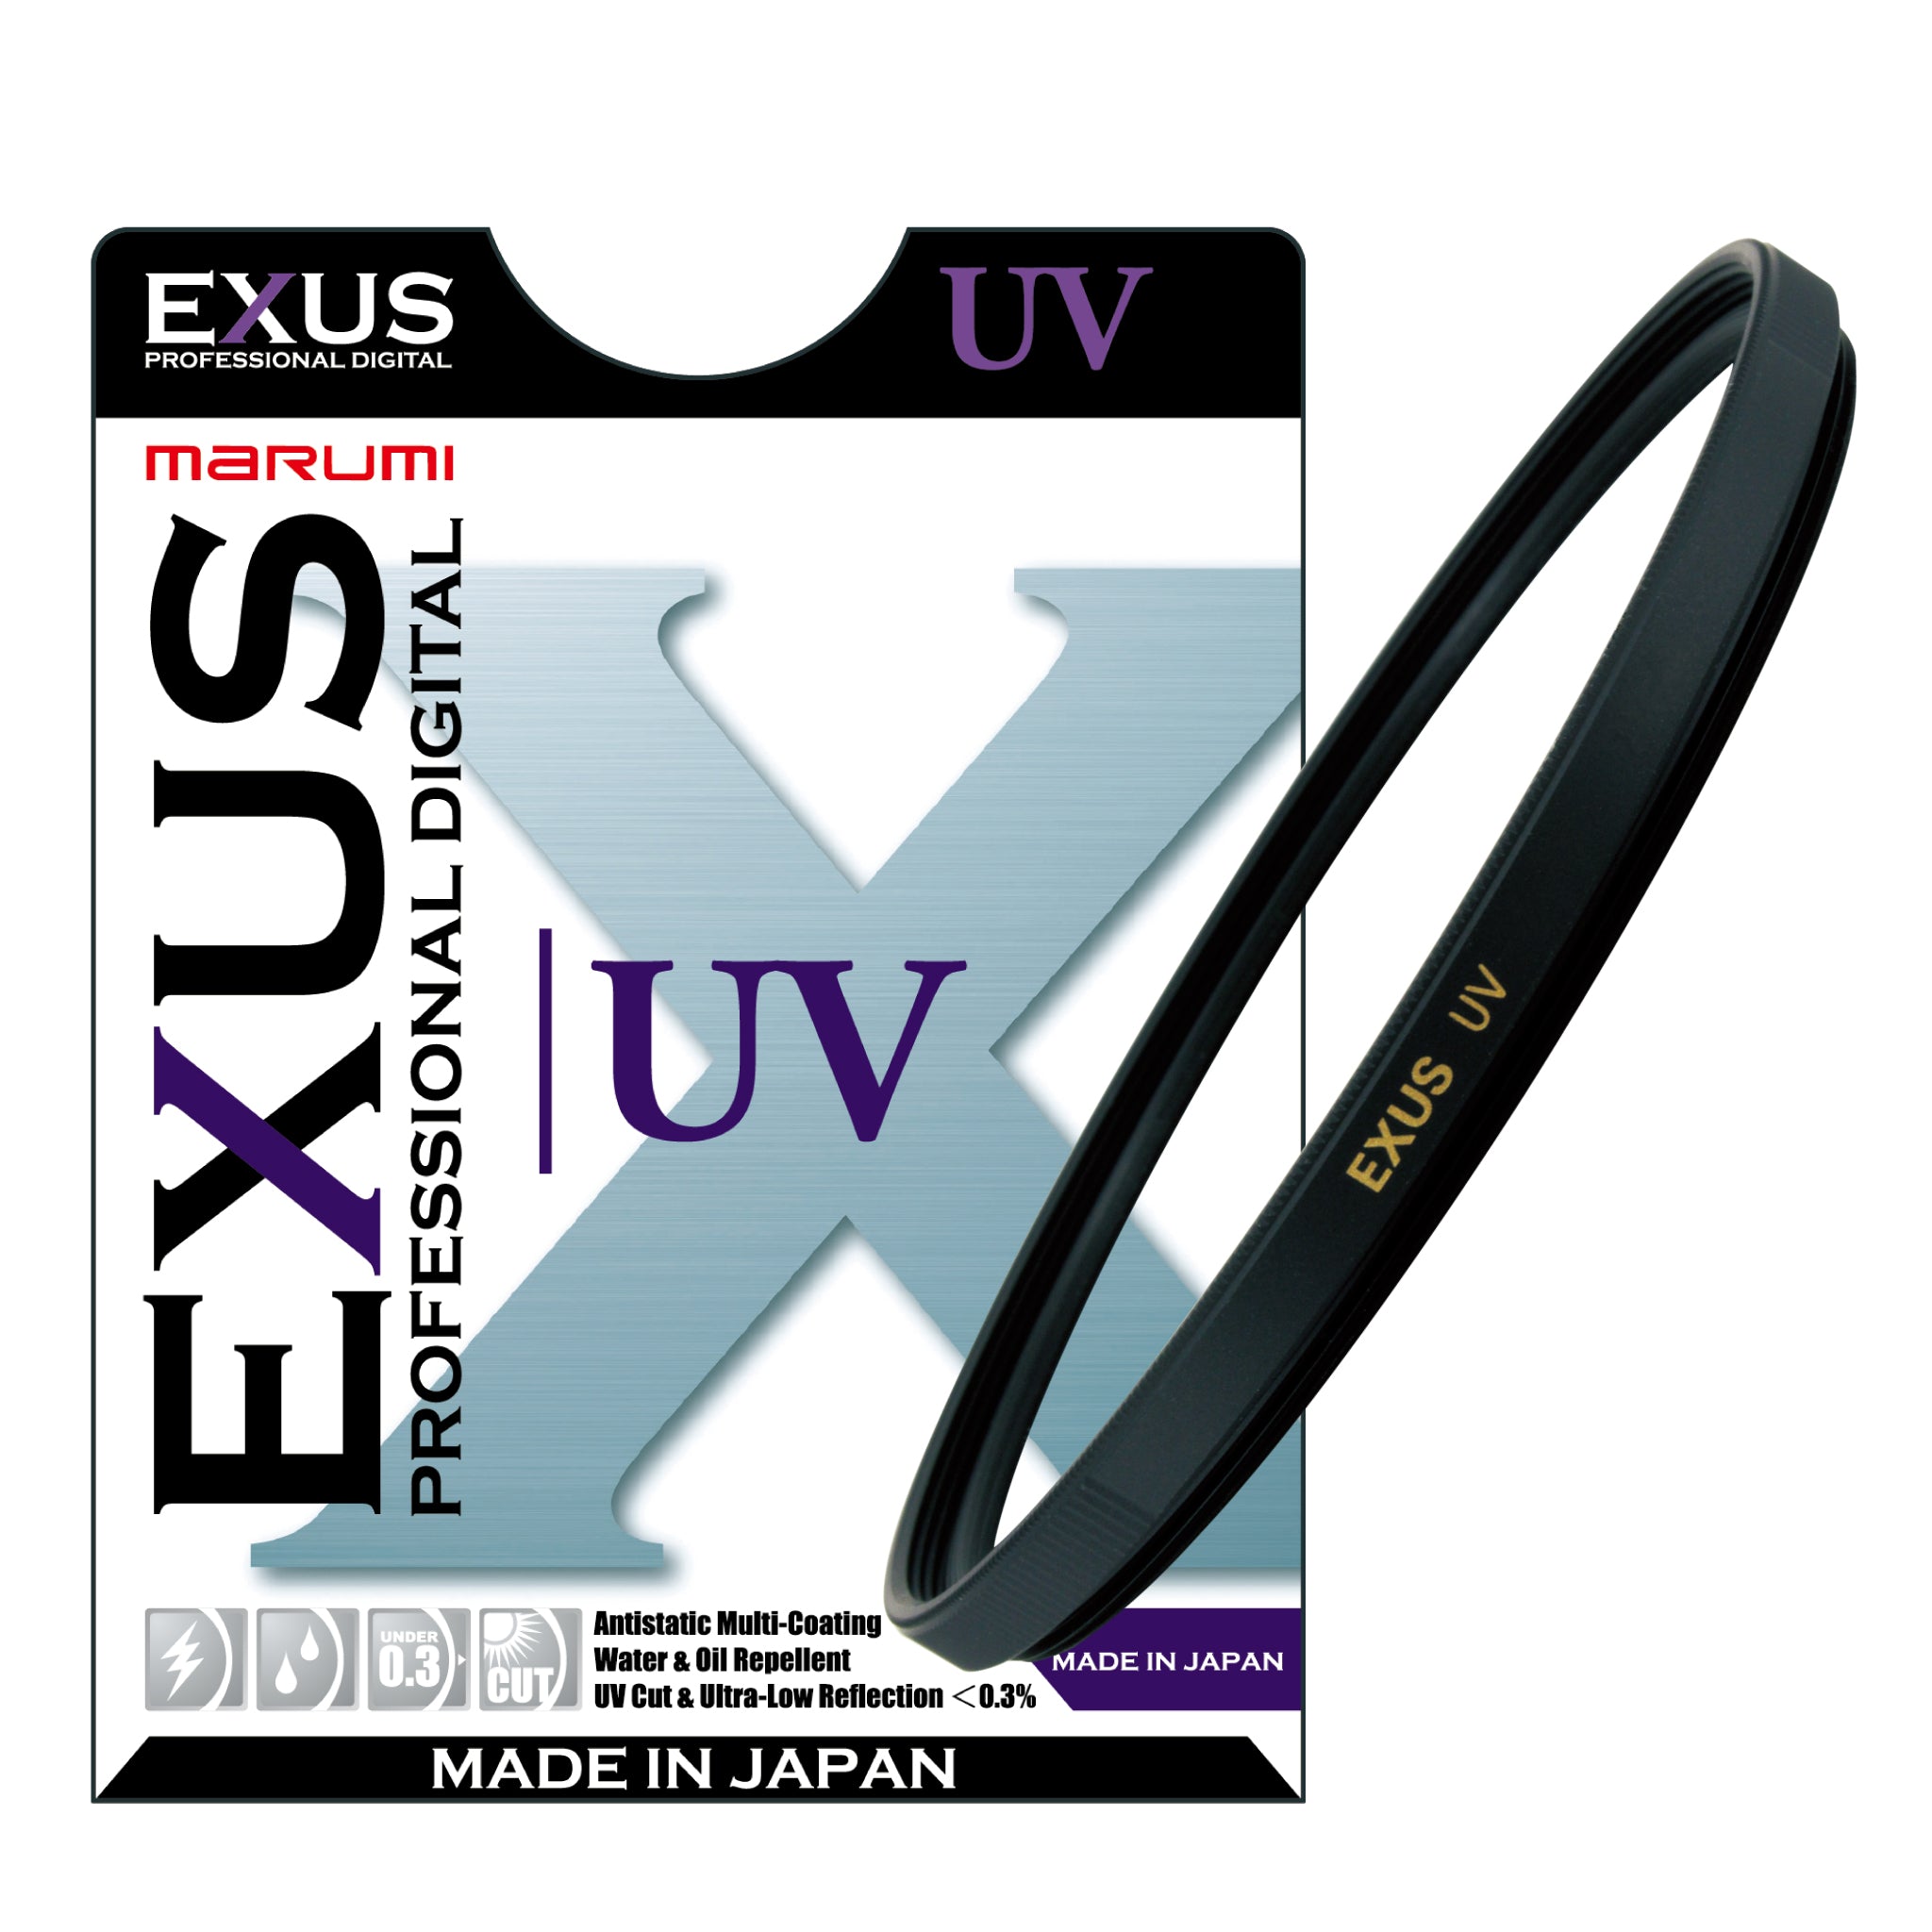 Marumi EXUS UV – marumi